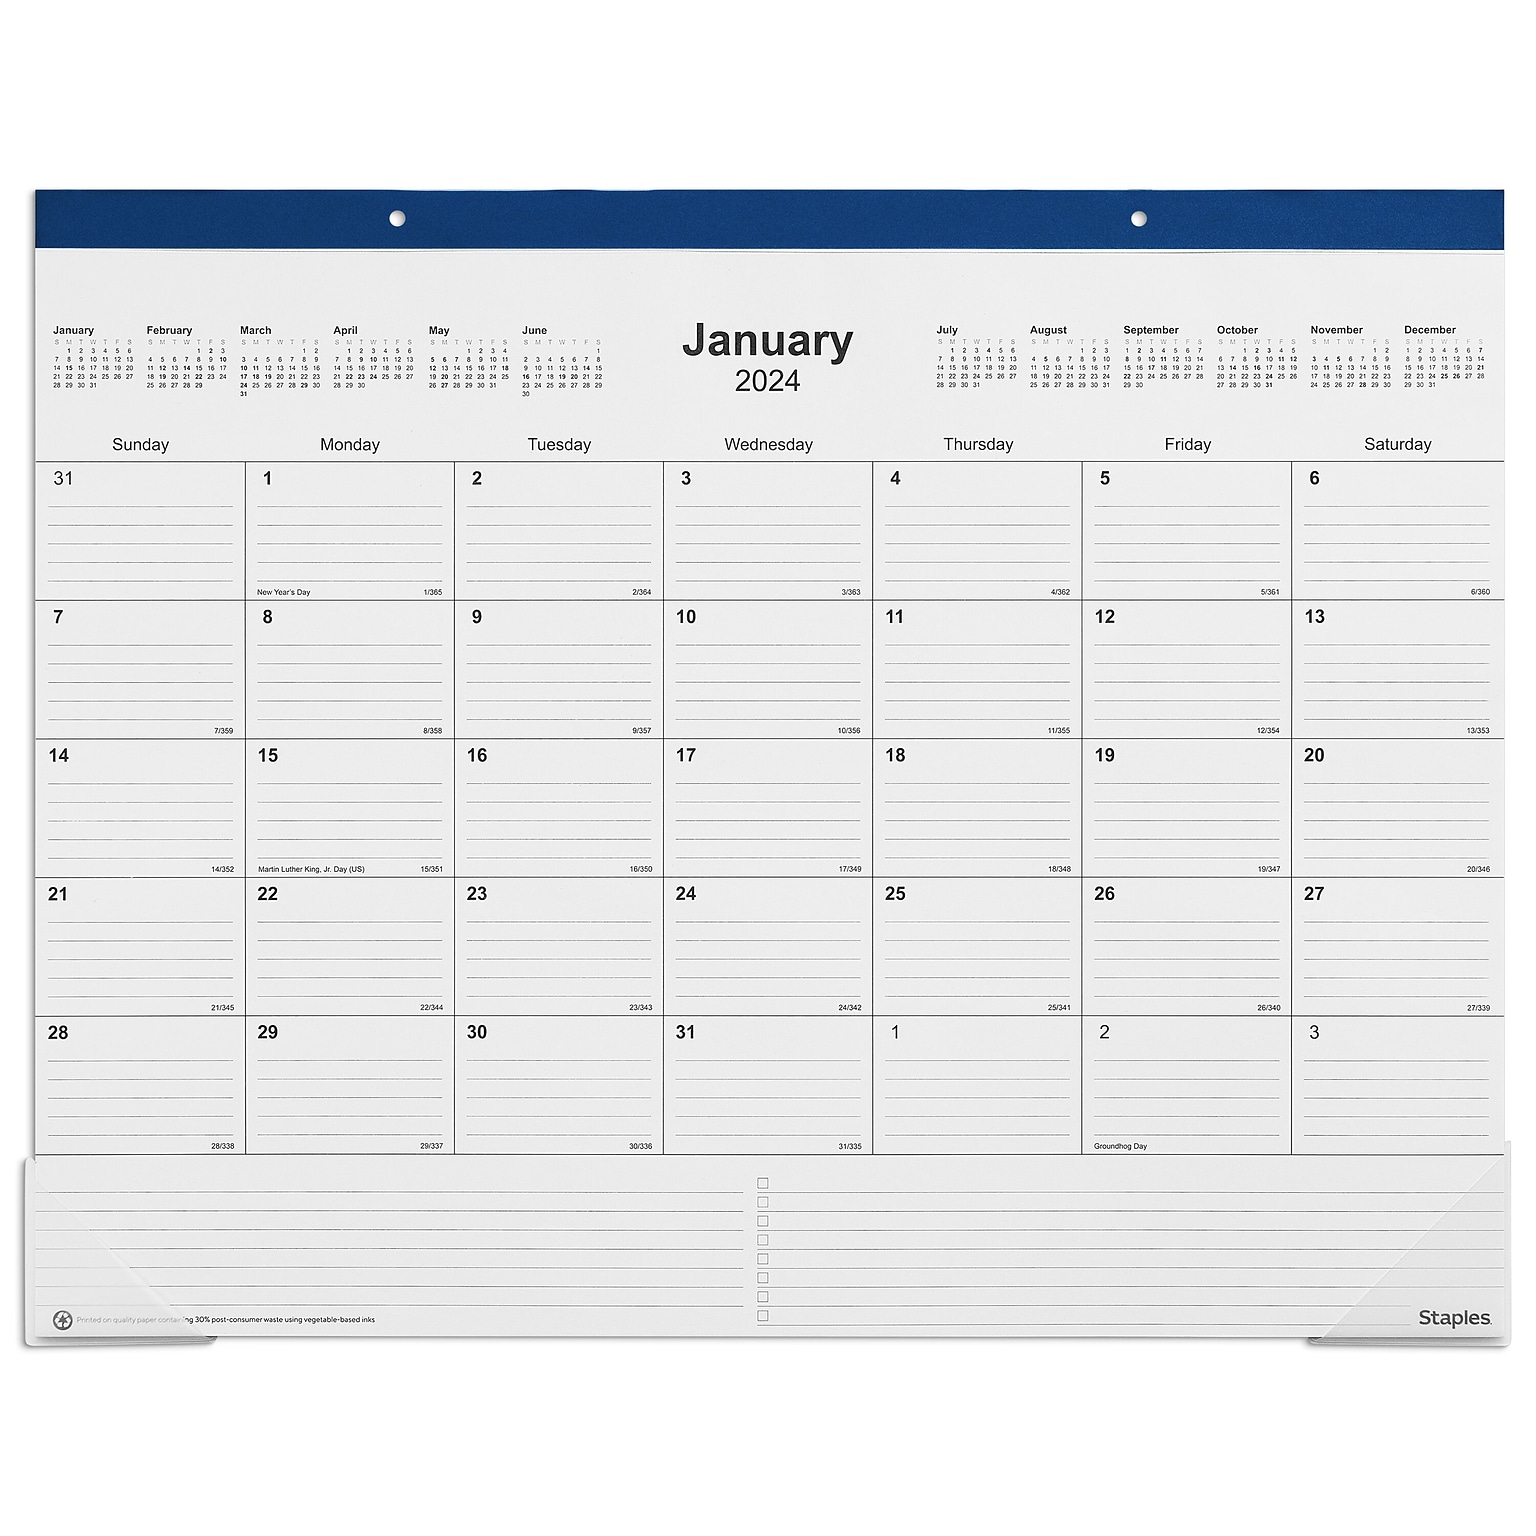 2024 Staples 22 x 17 Desk Pad Calendar, Navy (ST59700-24)